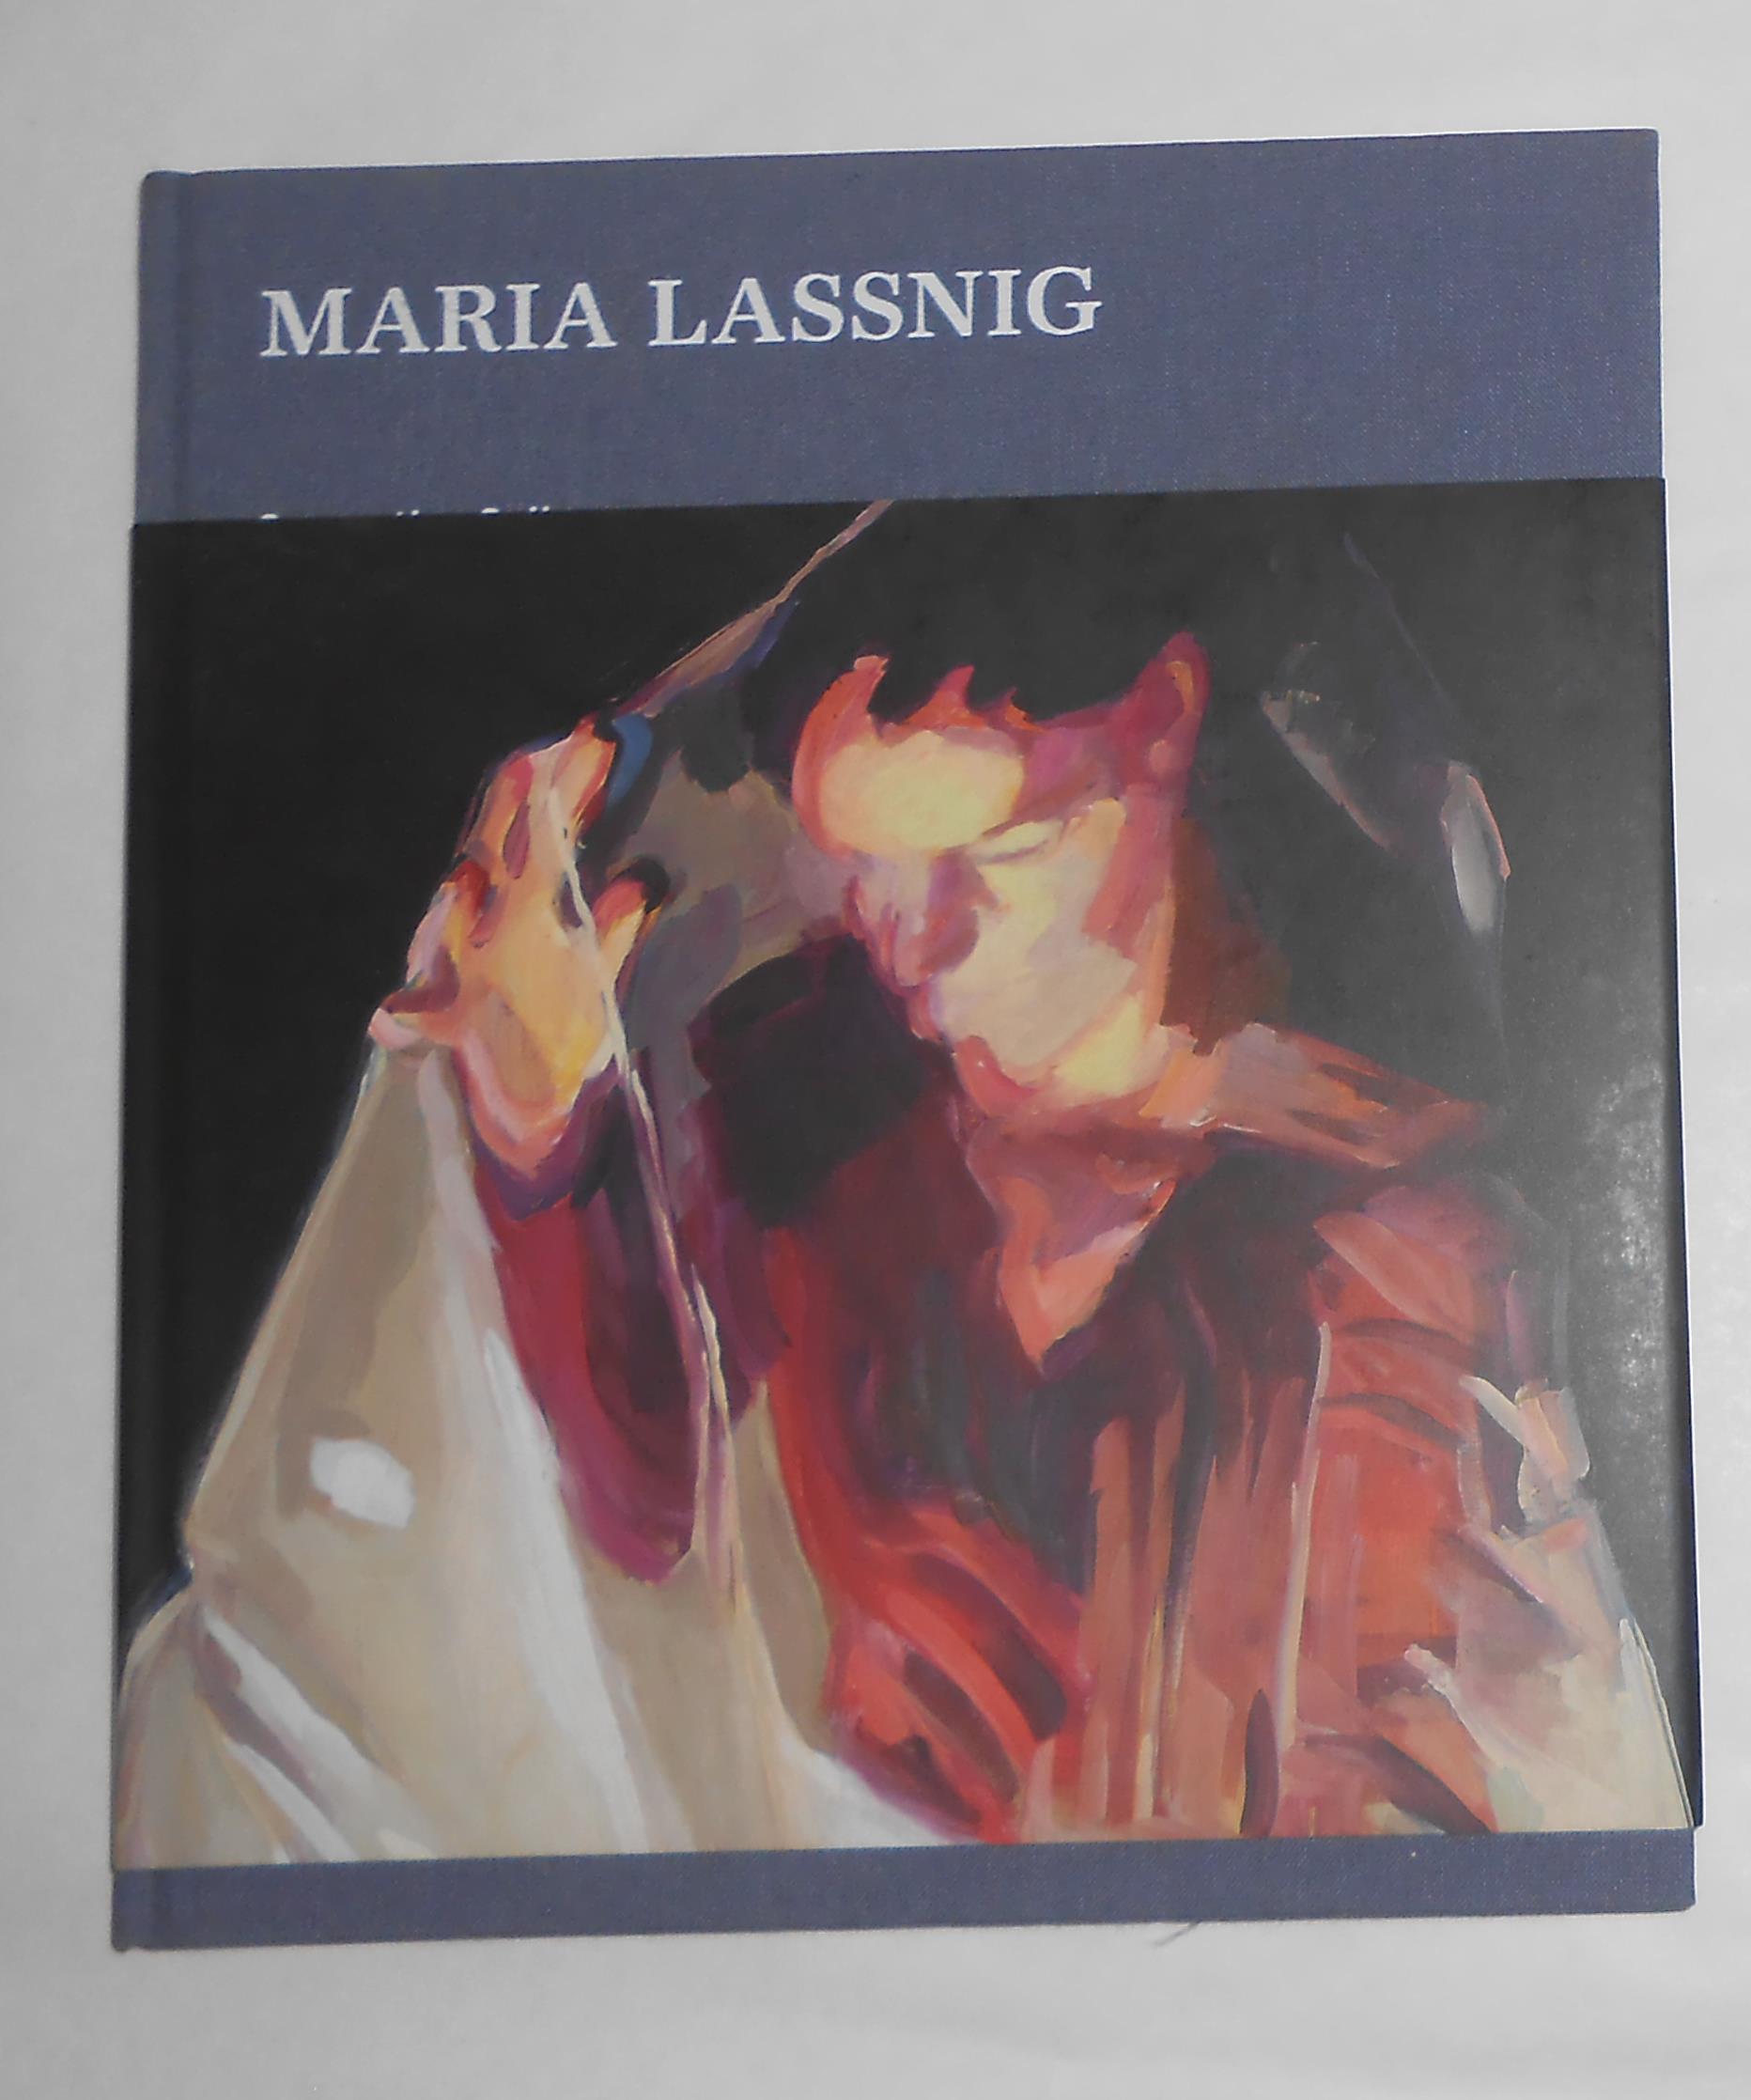 Maria Lassnig (Serpentine Gallery, London 25 April - 8 June 2008) - LASSNIG, Maria ] Robert Storr, Paul Mccarthy, Jennifer Higgie (essays)